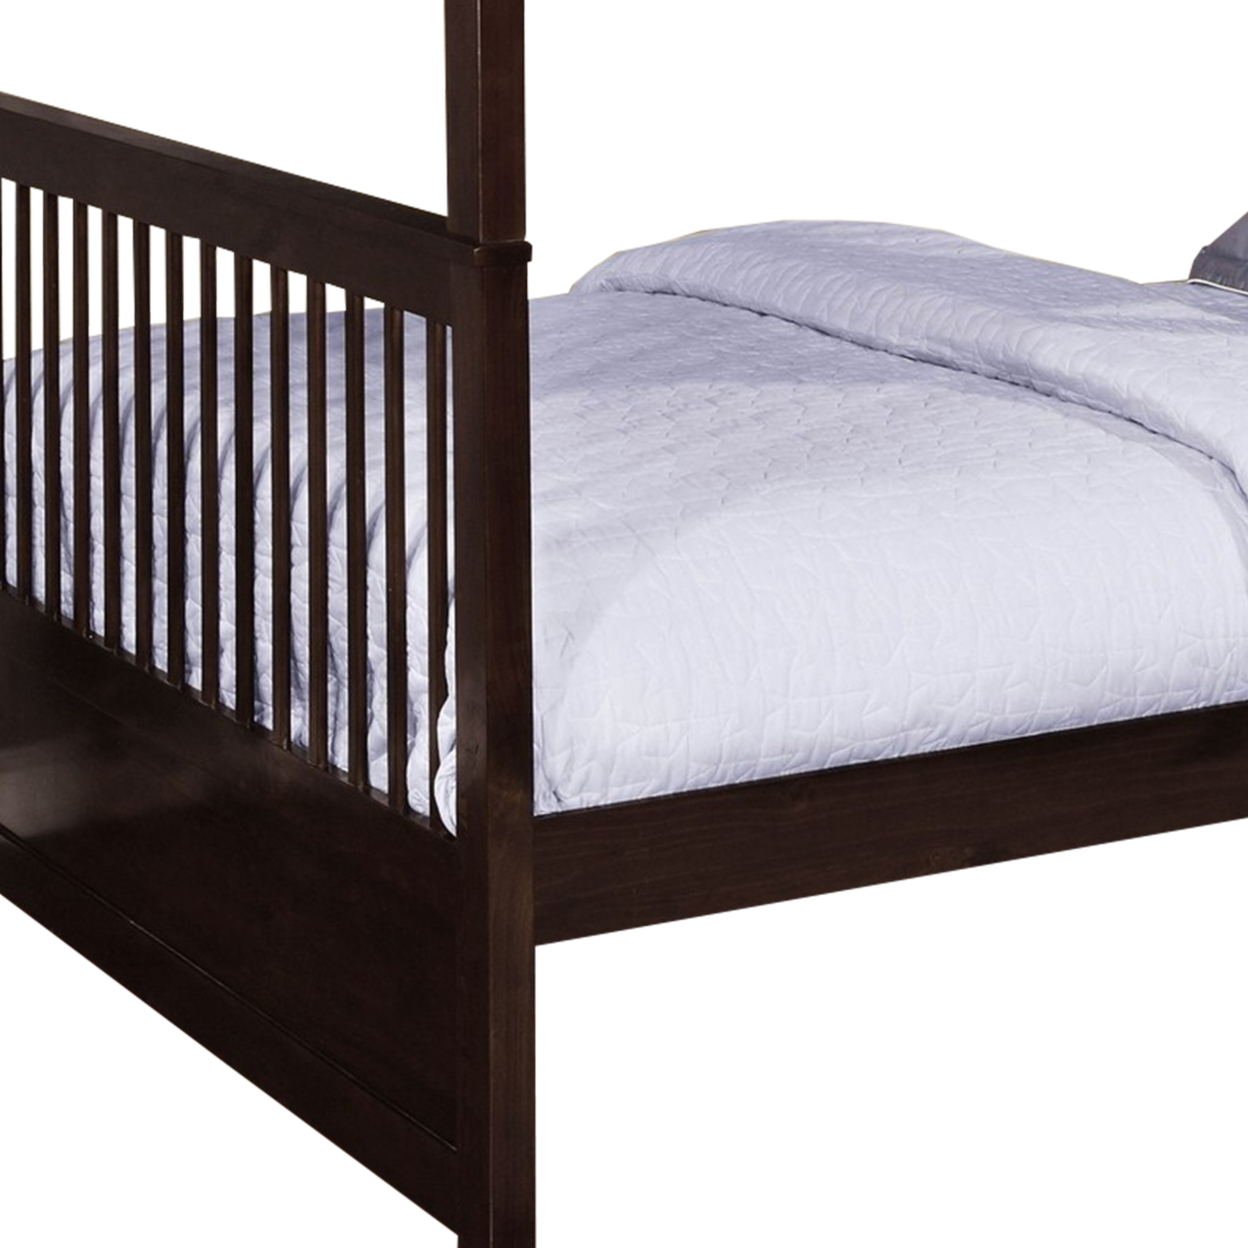 Full Over Full Wooden Bunk Bed With Slatted Details, Brown- Saltoro Sherpi